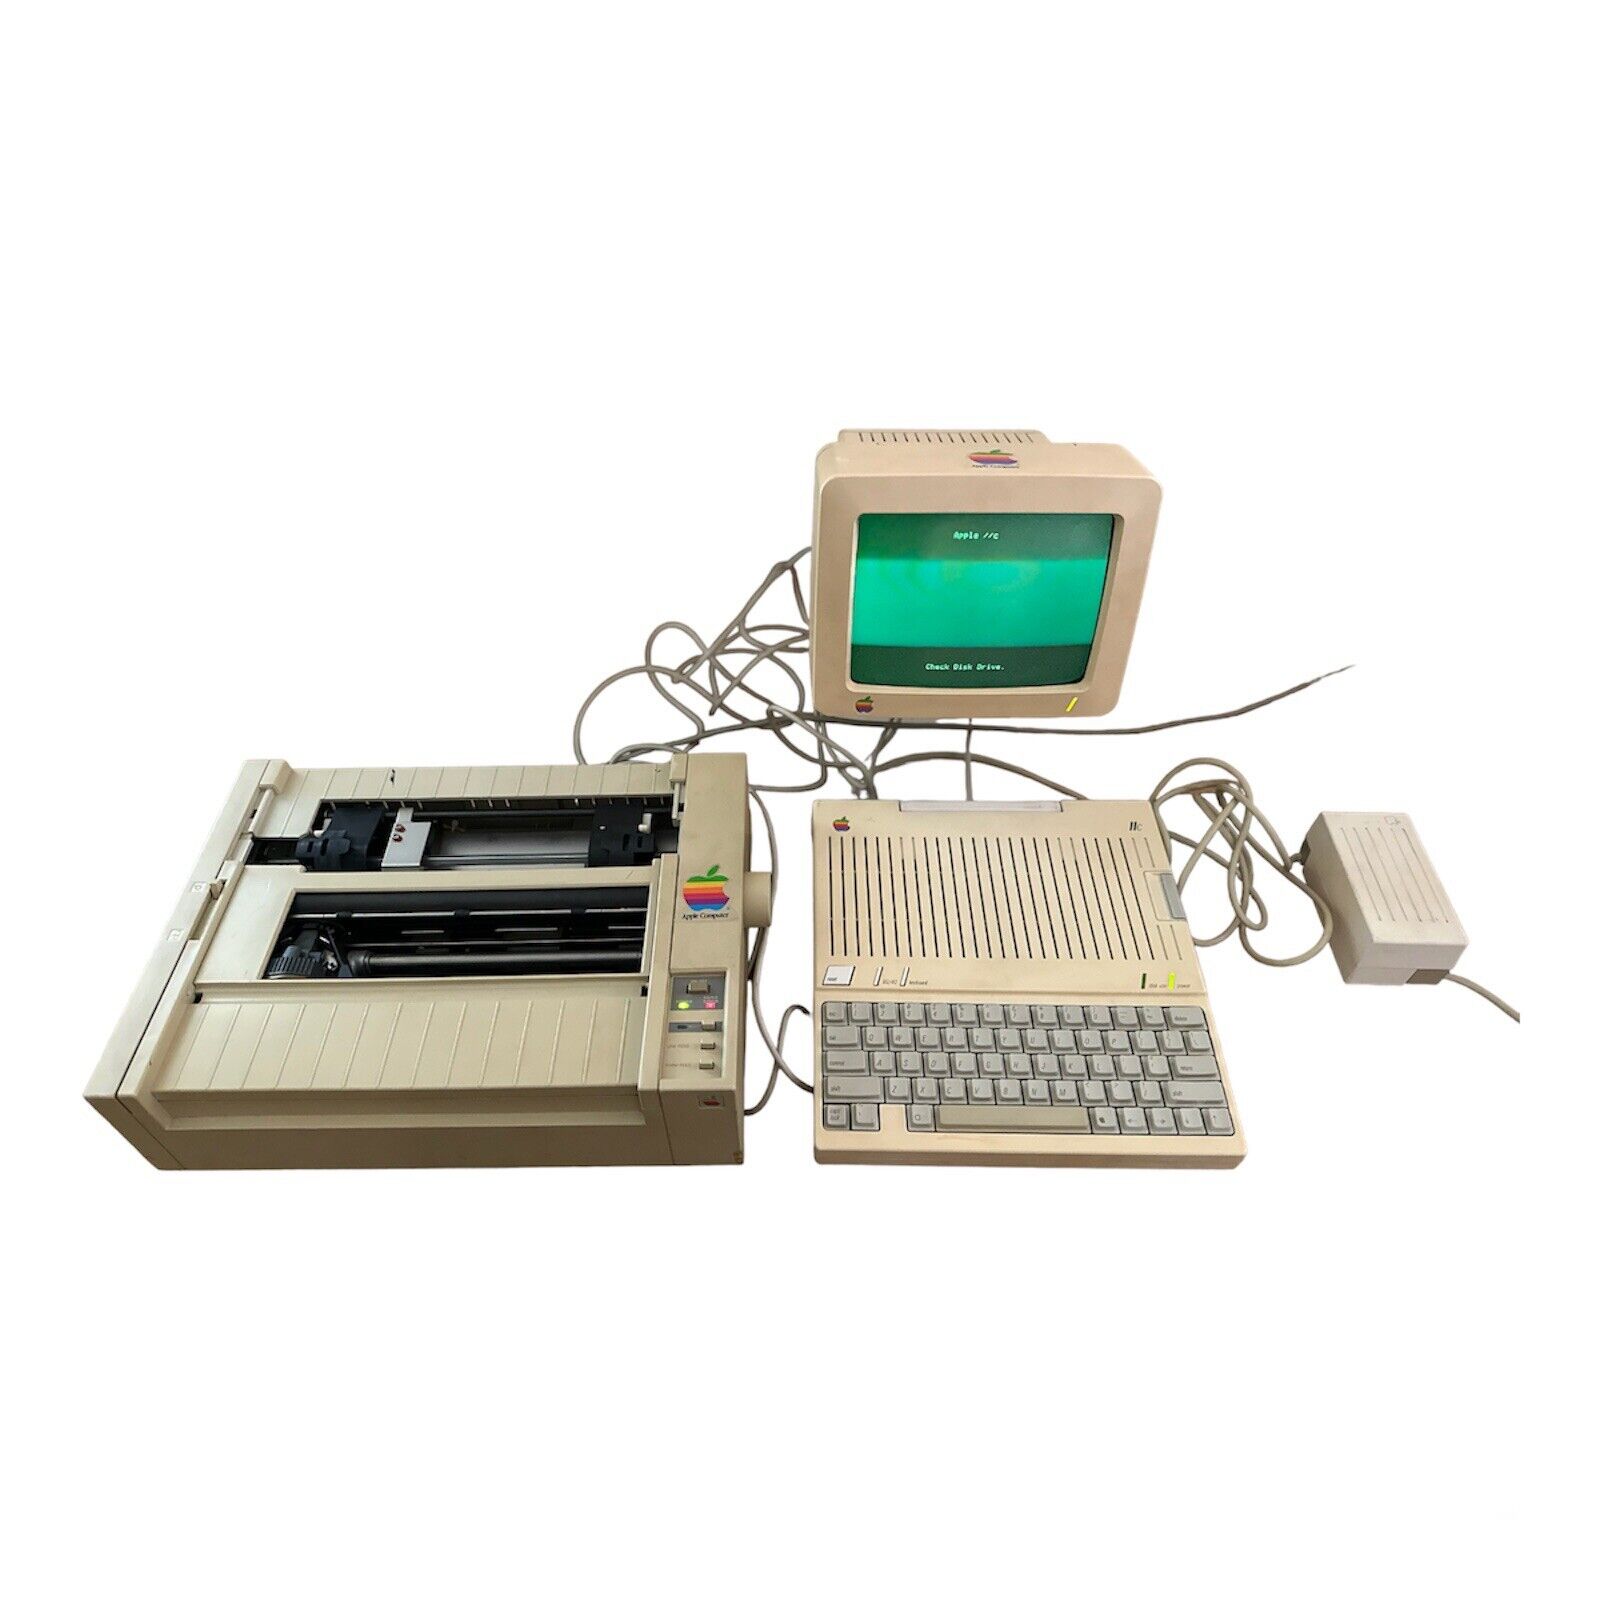 Vintage Apple IIc 2c Computer With Monitor & Printer